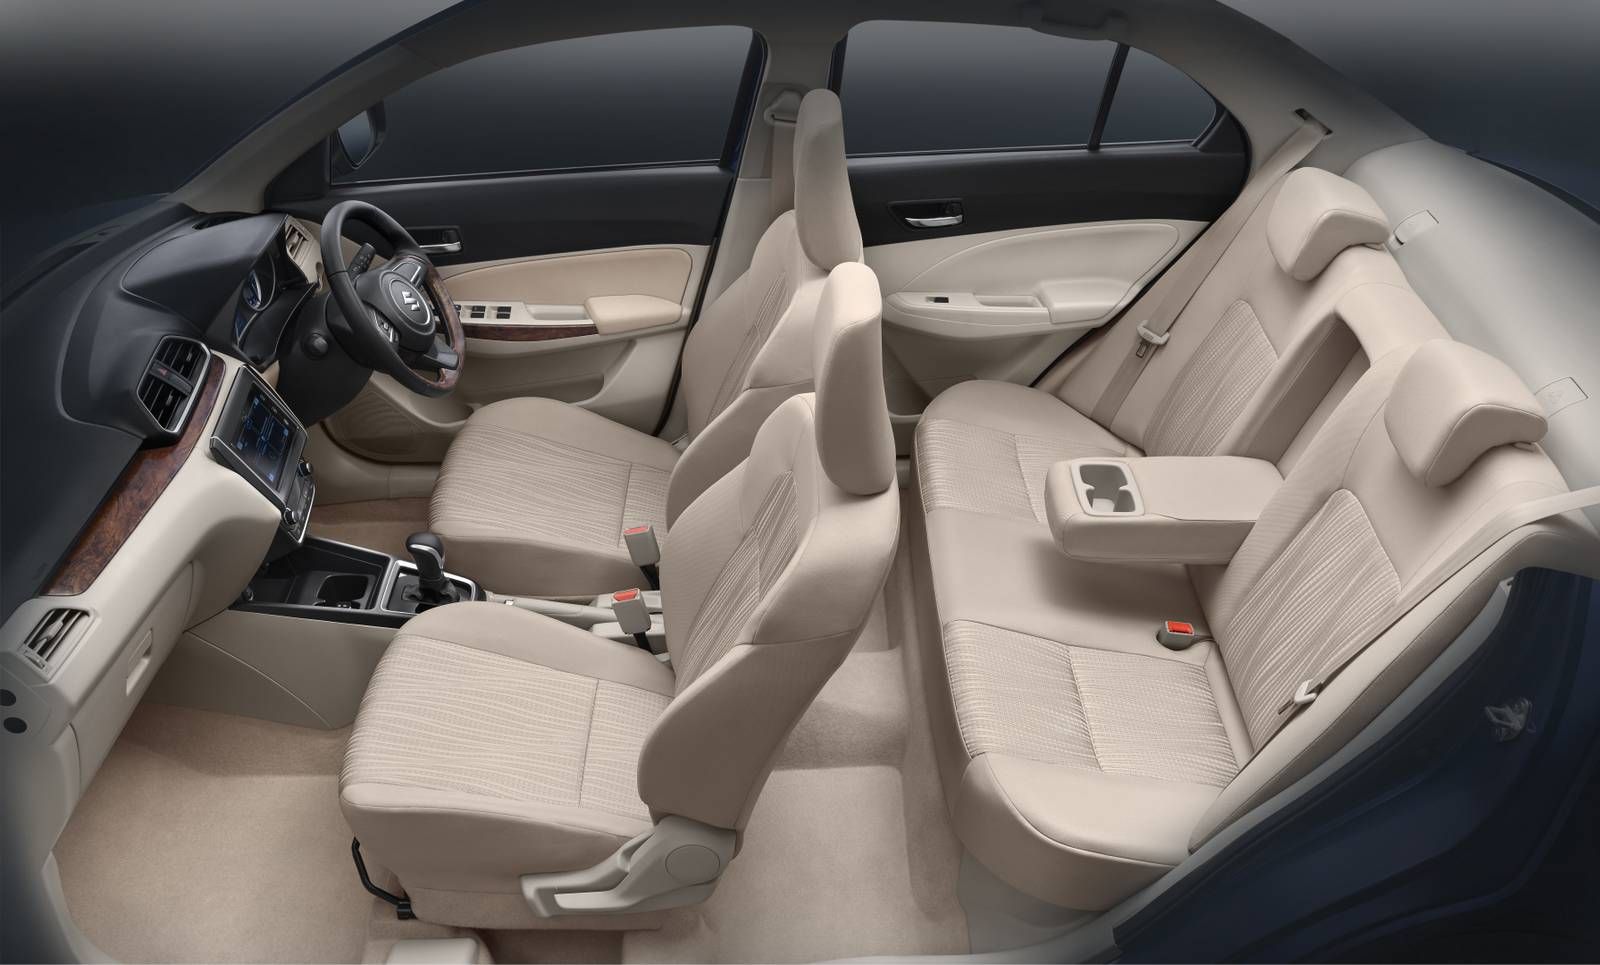 Suzuki Dzire interior - Seats